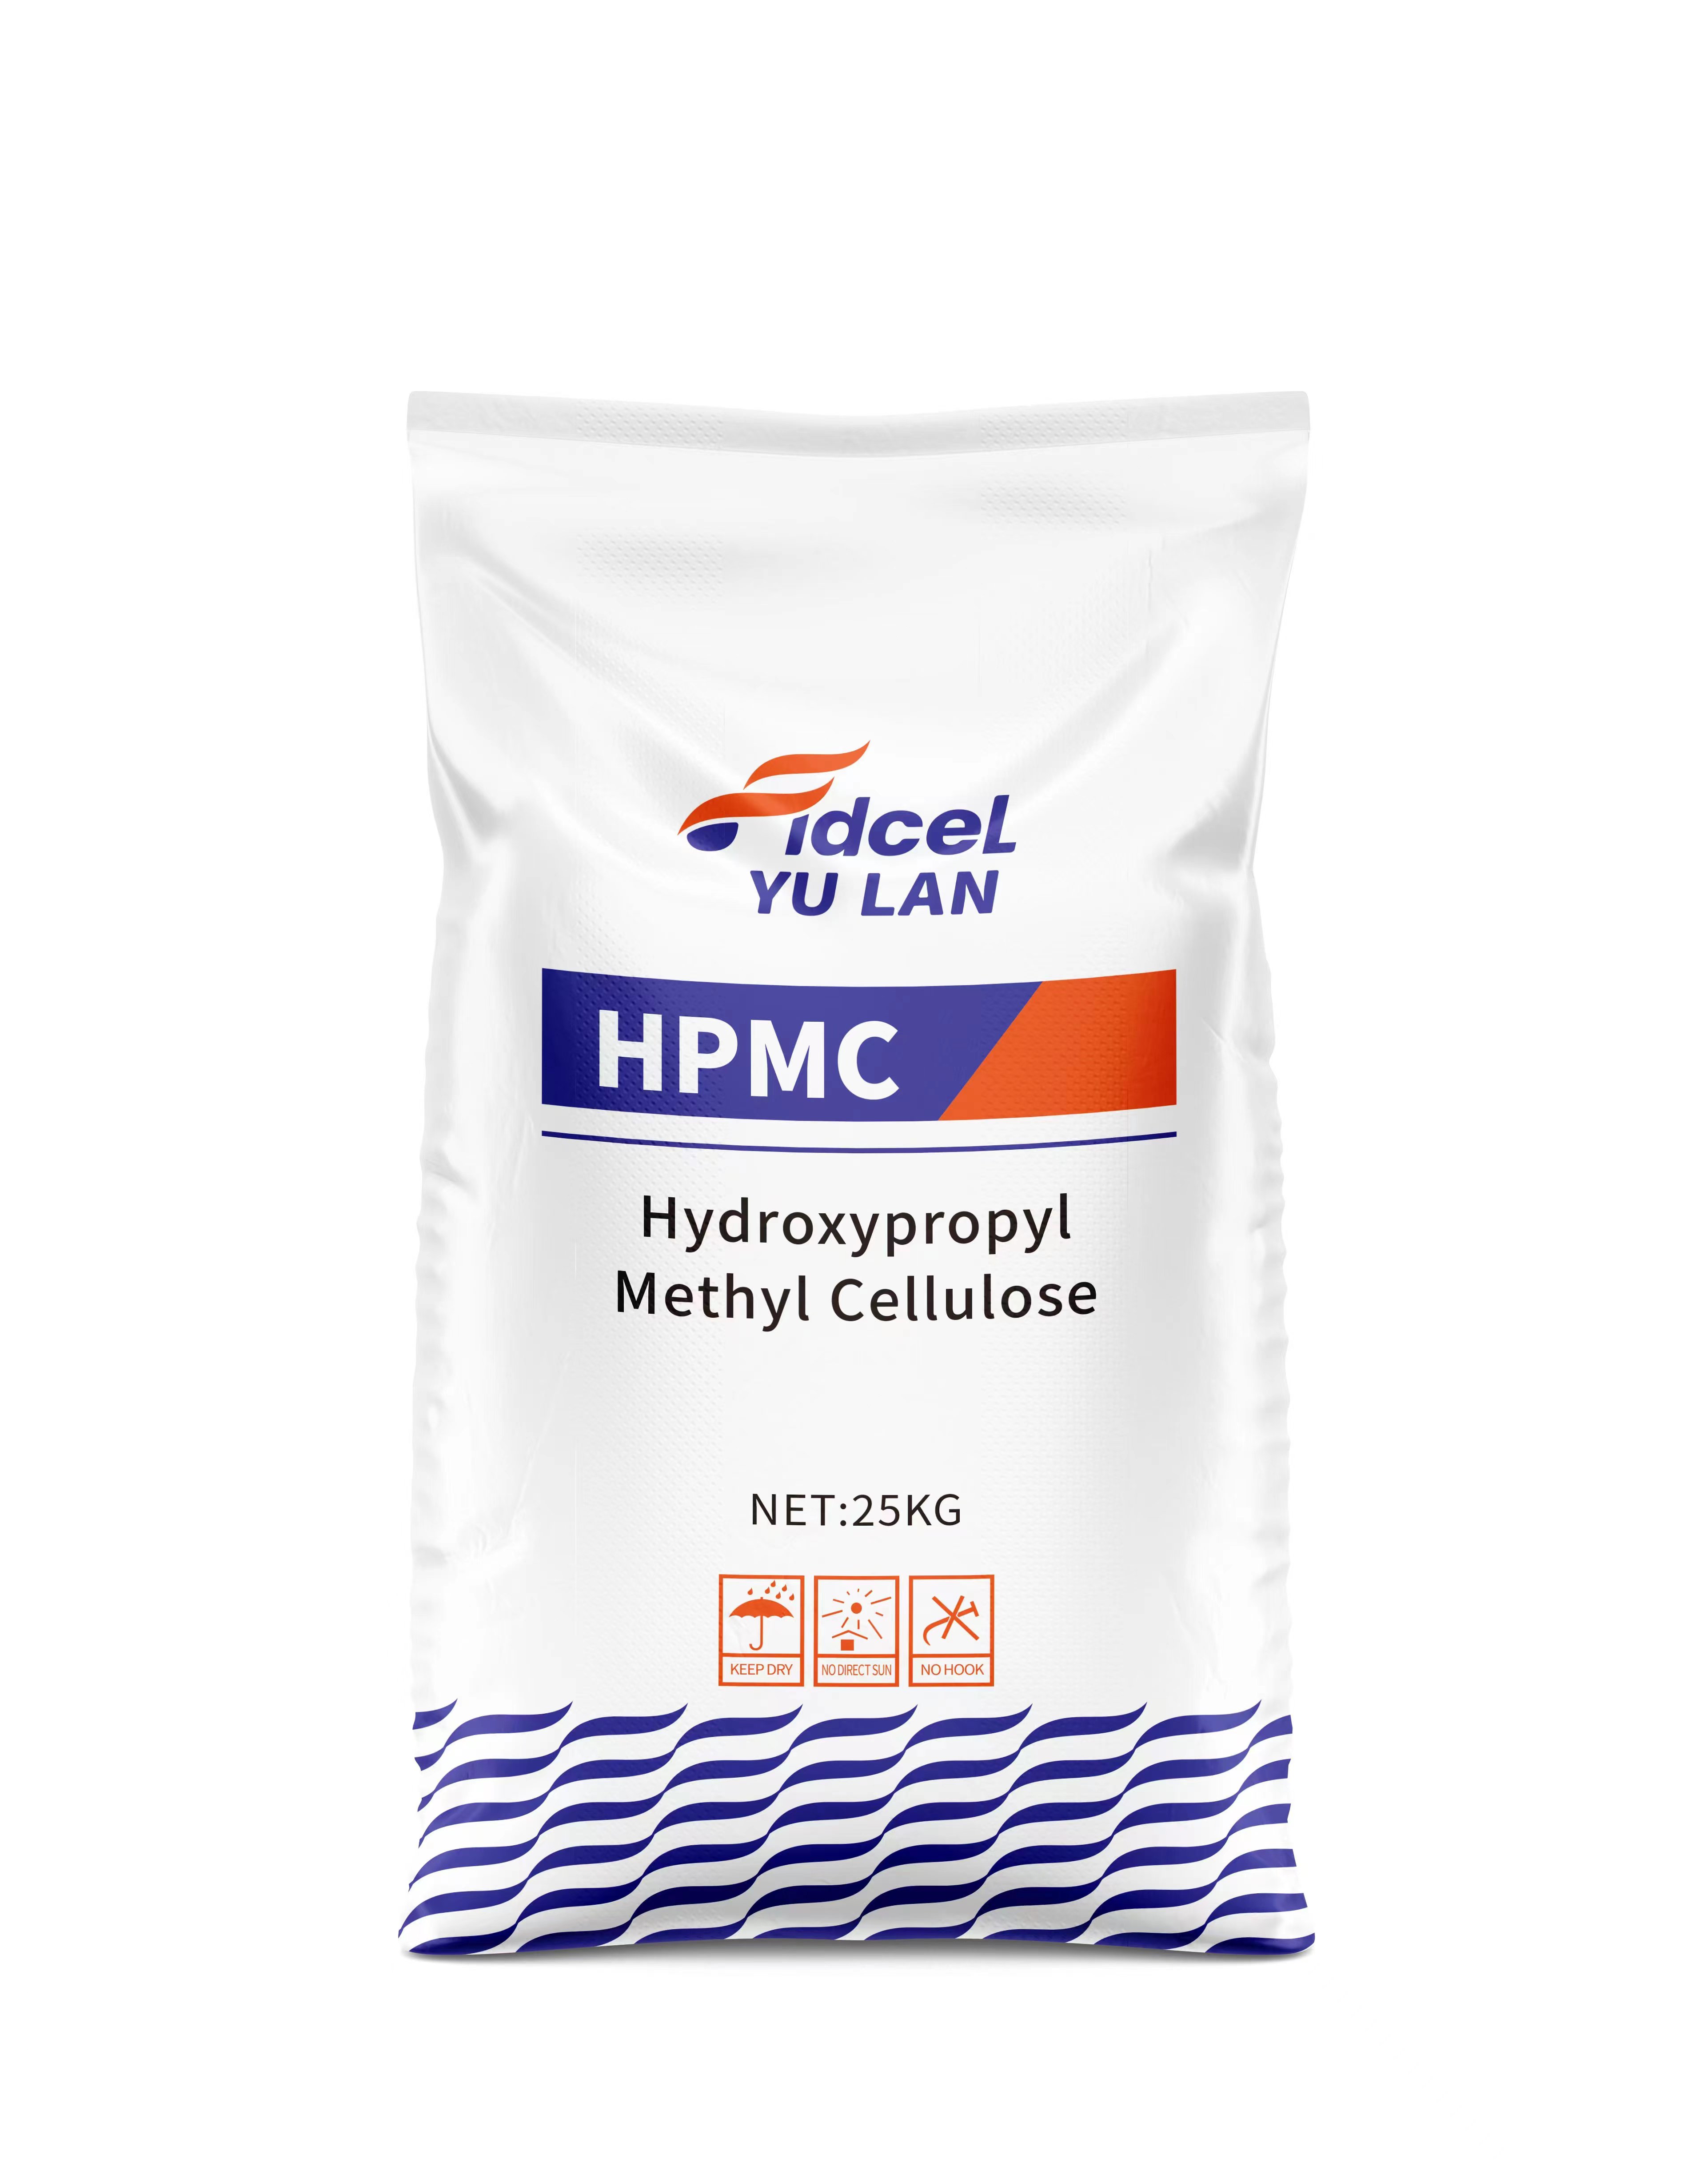 >Hydroxypropyl methylcellulose (HPMC) properties: